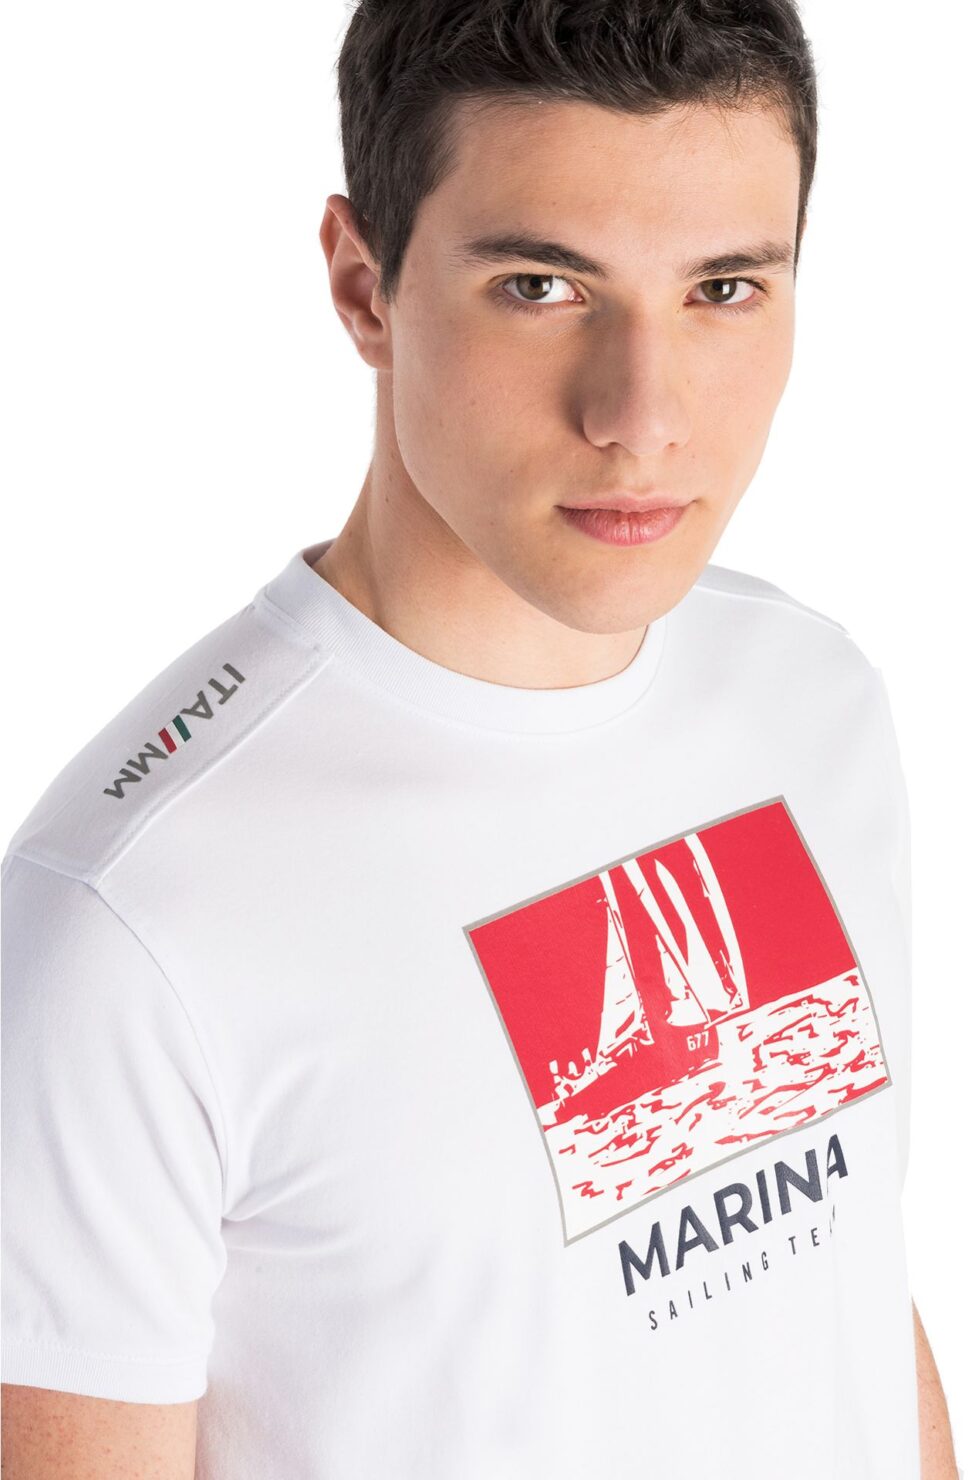 T-shirt Marina Militare  Koszulka drużyny żeglarskiej